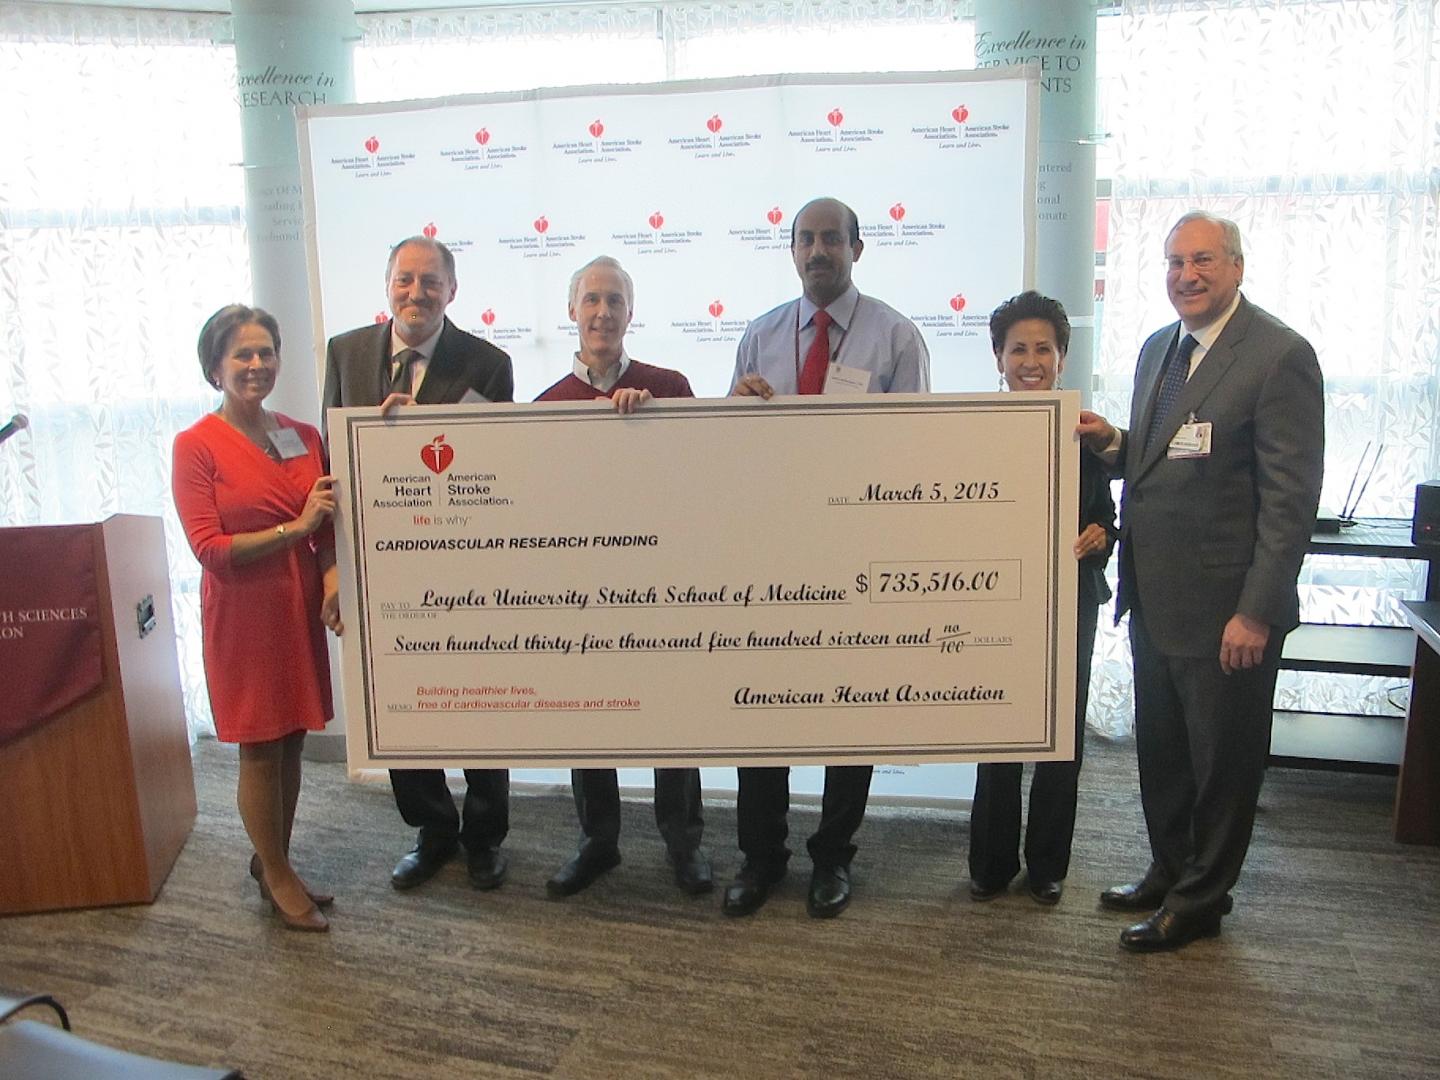 AHA Awards Loyola $735,516 for Cardiac Research